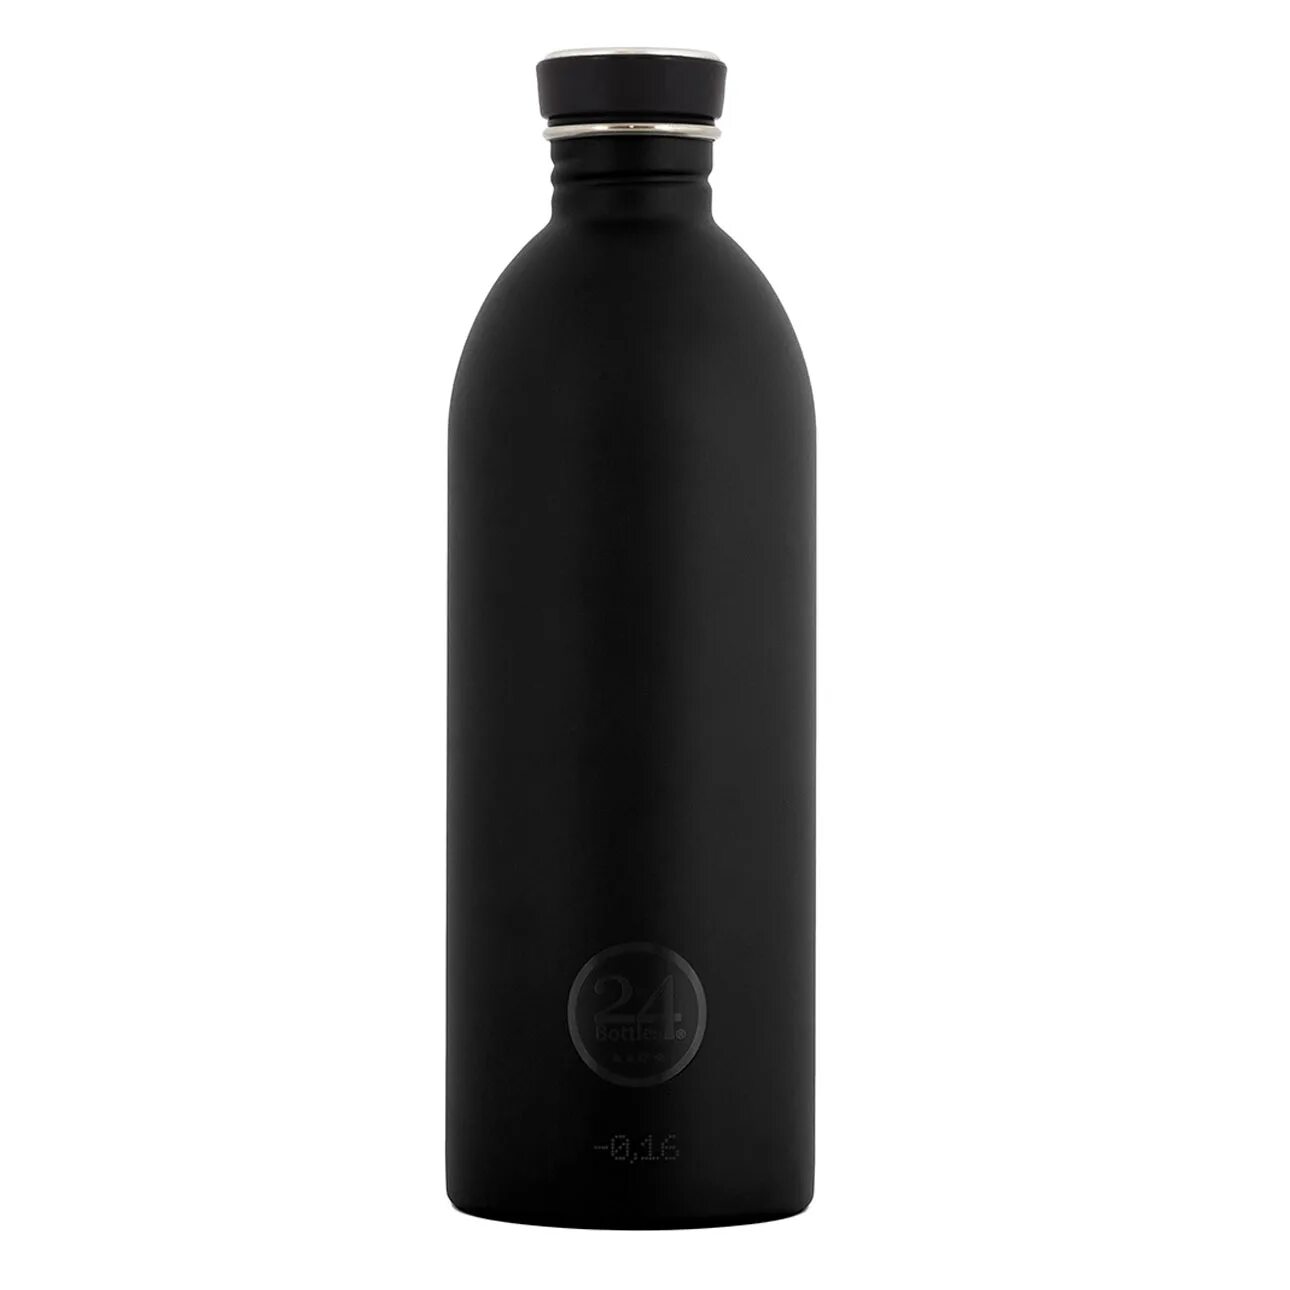 Темные бутылочки. Бутылка 24bottles clima Bottle 330 мл. Черная бутылка. Бутылочка черная. Черный флакон.